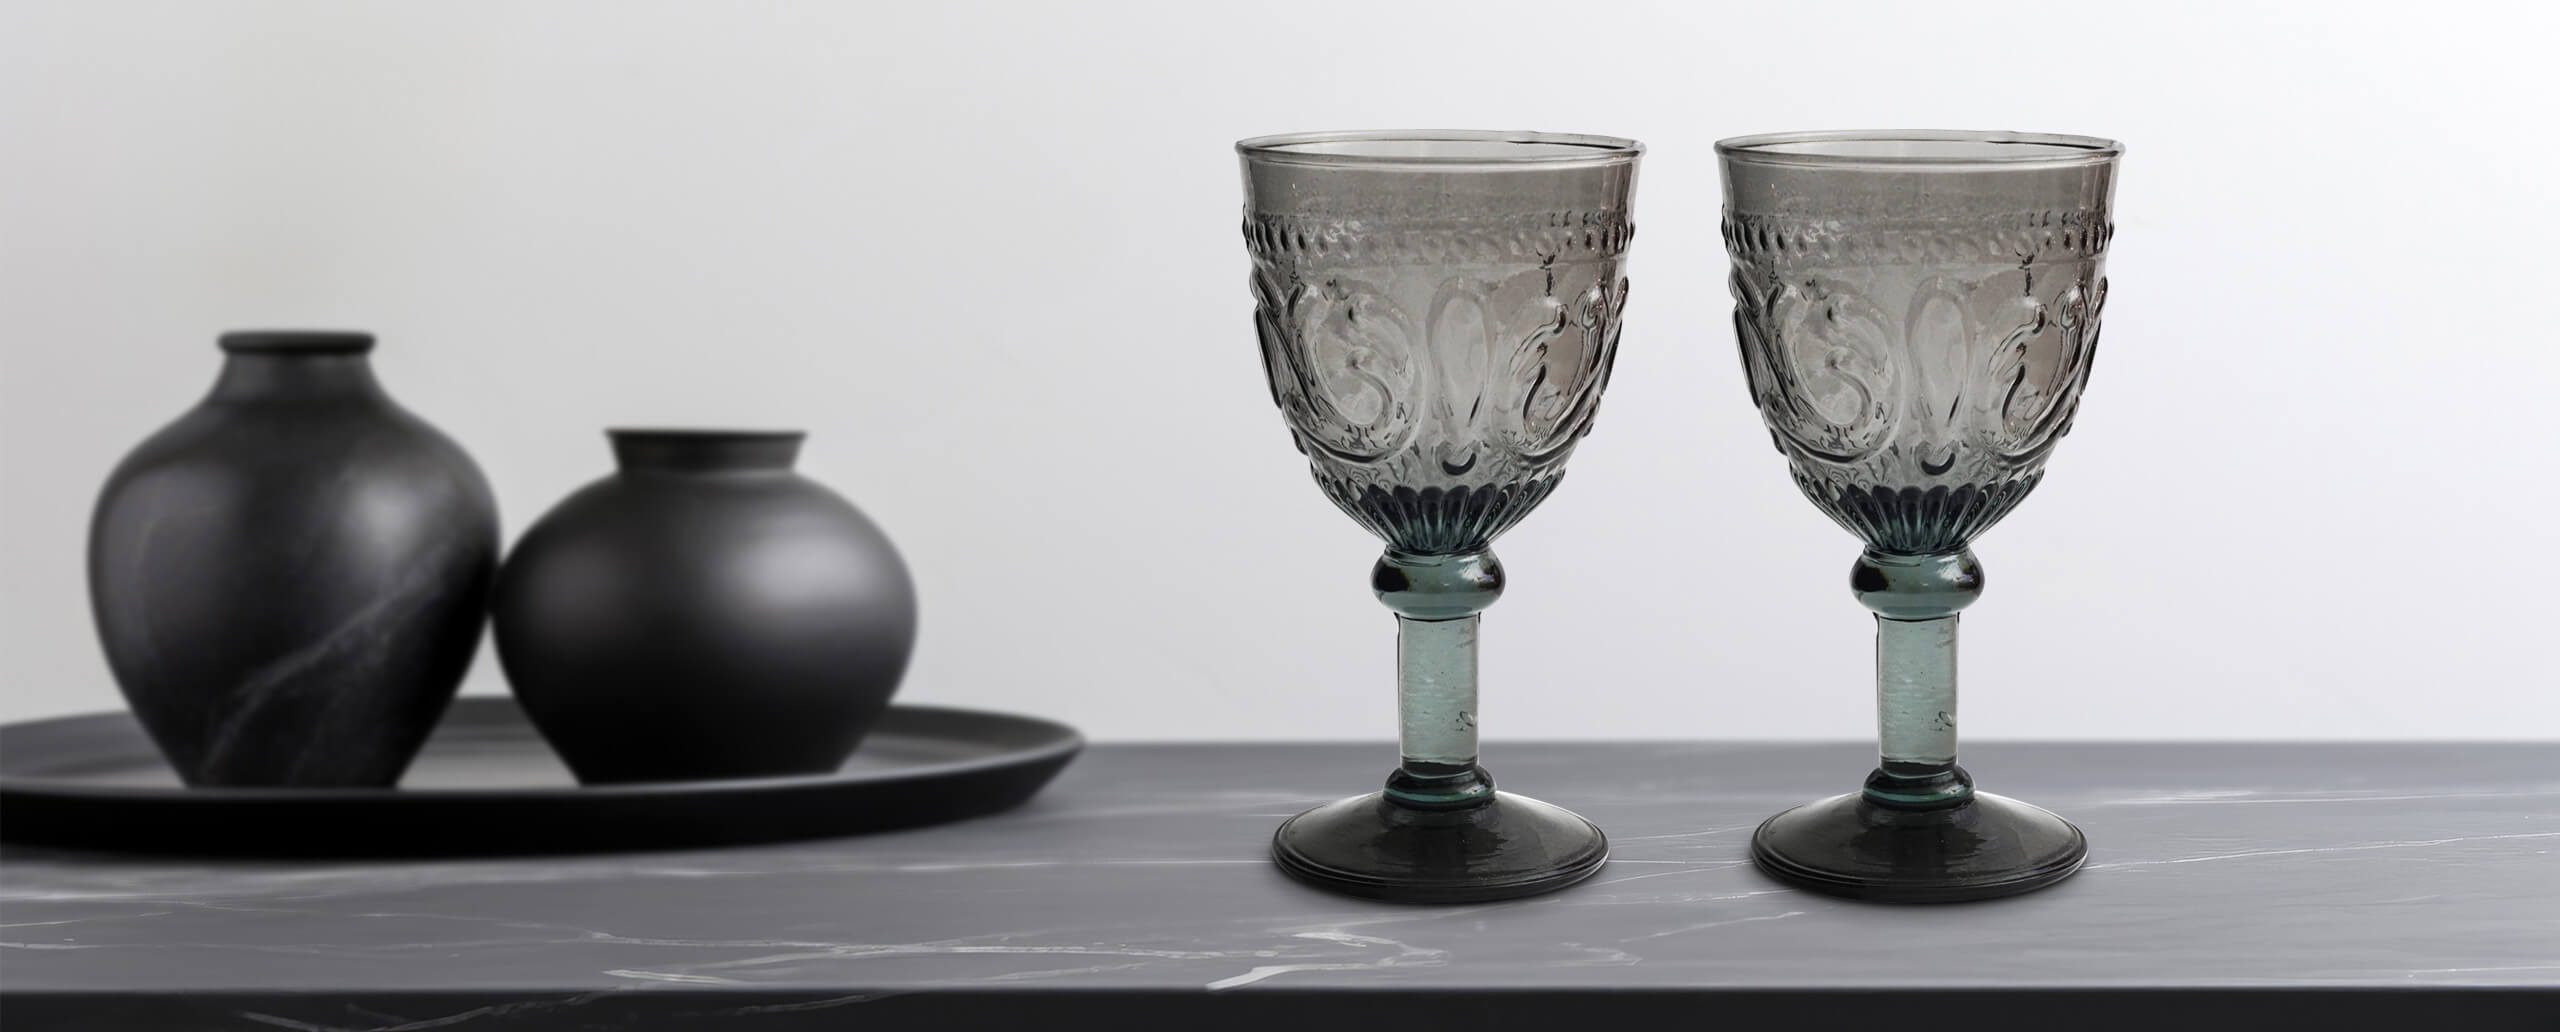 The Glass Shop | Articulos de mesa | Copas de agua